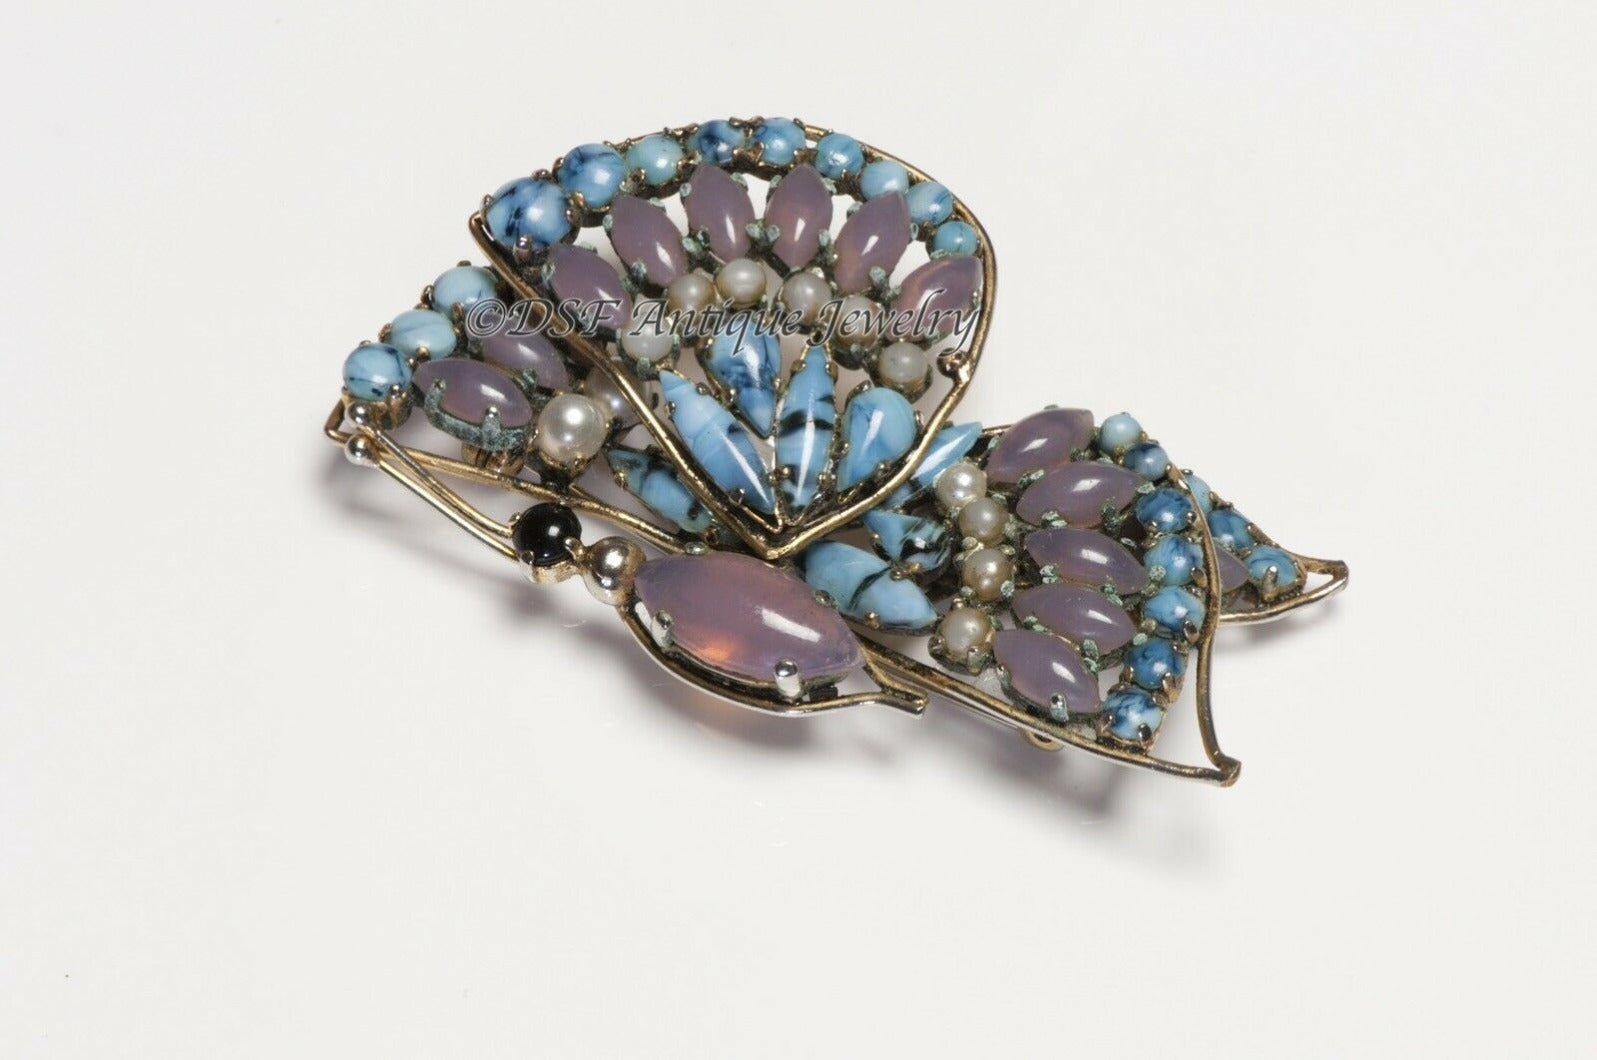 Christian Dior Henkel & Grosse 1964 Blue Pink Glass Faux Pearl Butterfly Brooch - DSF Antique Jewelry